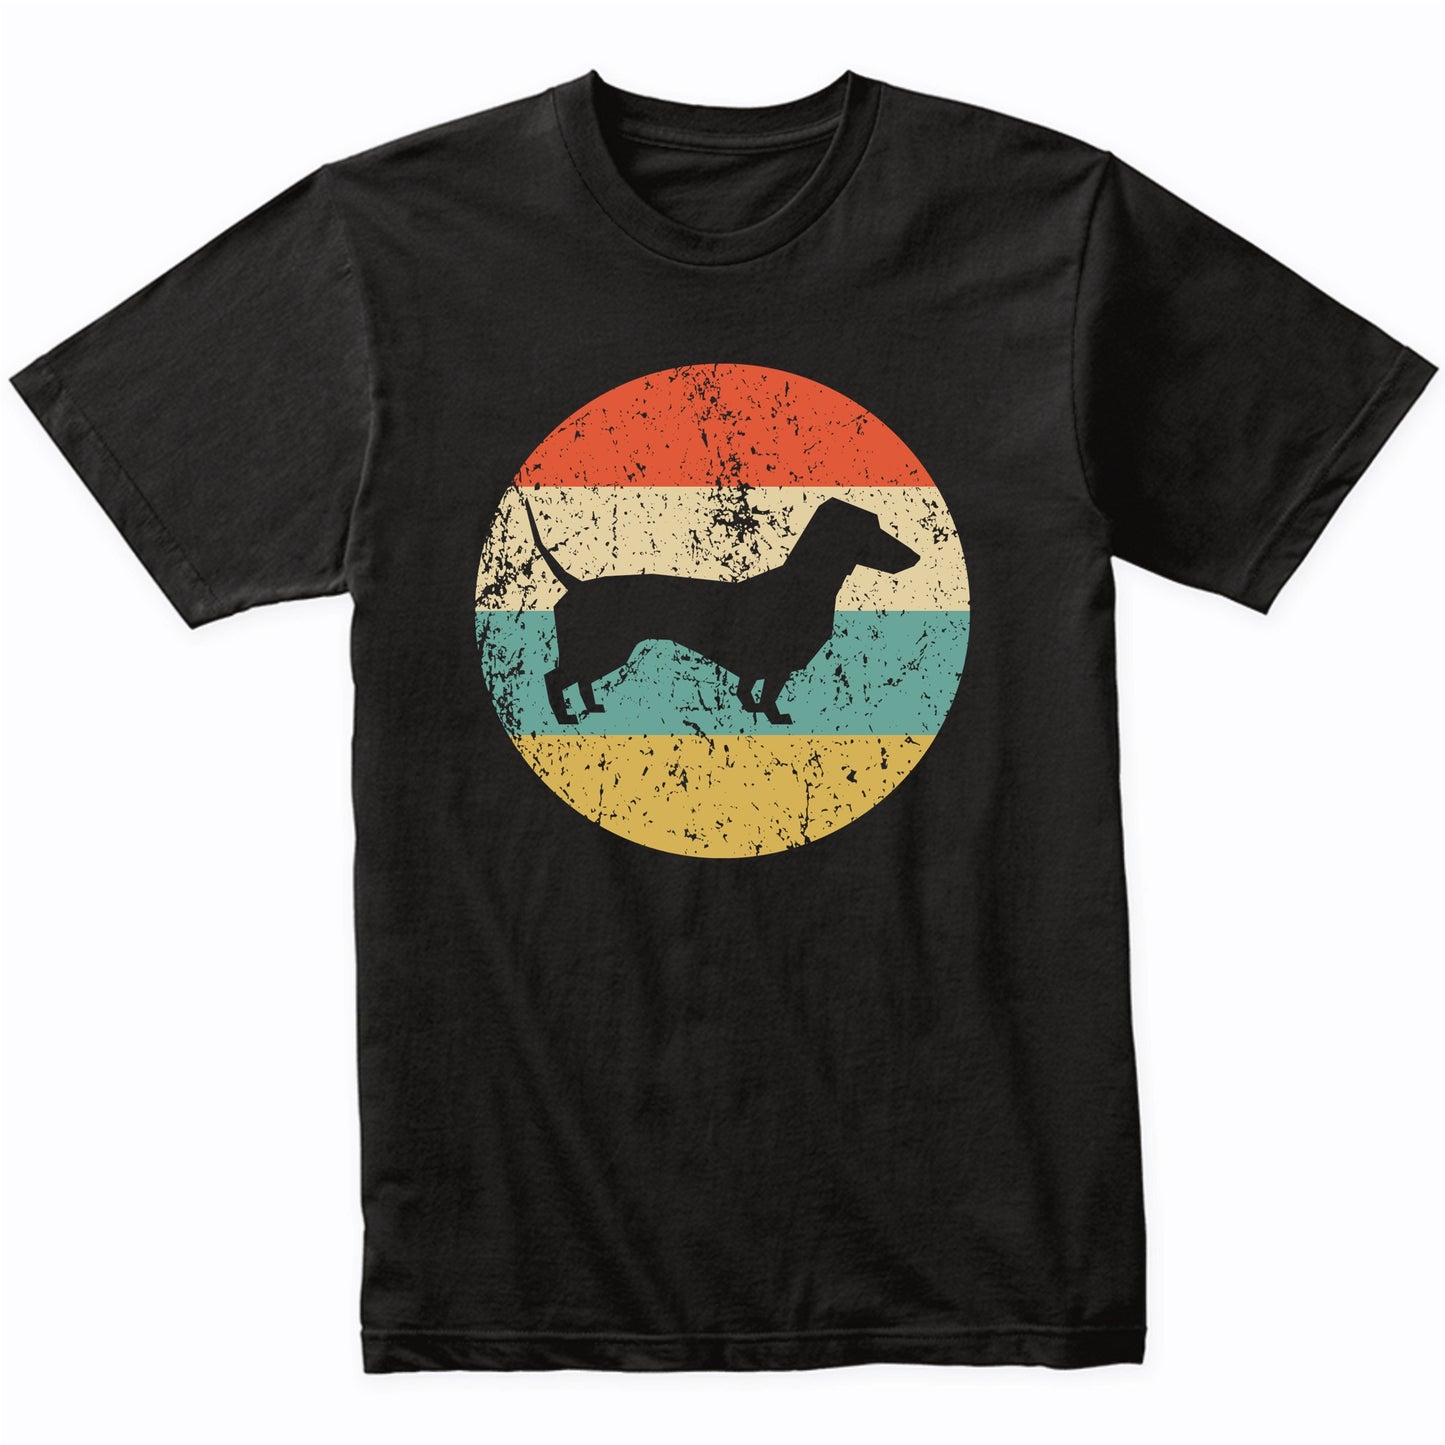 Dachshund Shirt - Vintage Retro Dachshund Dog T-Shirt